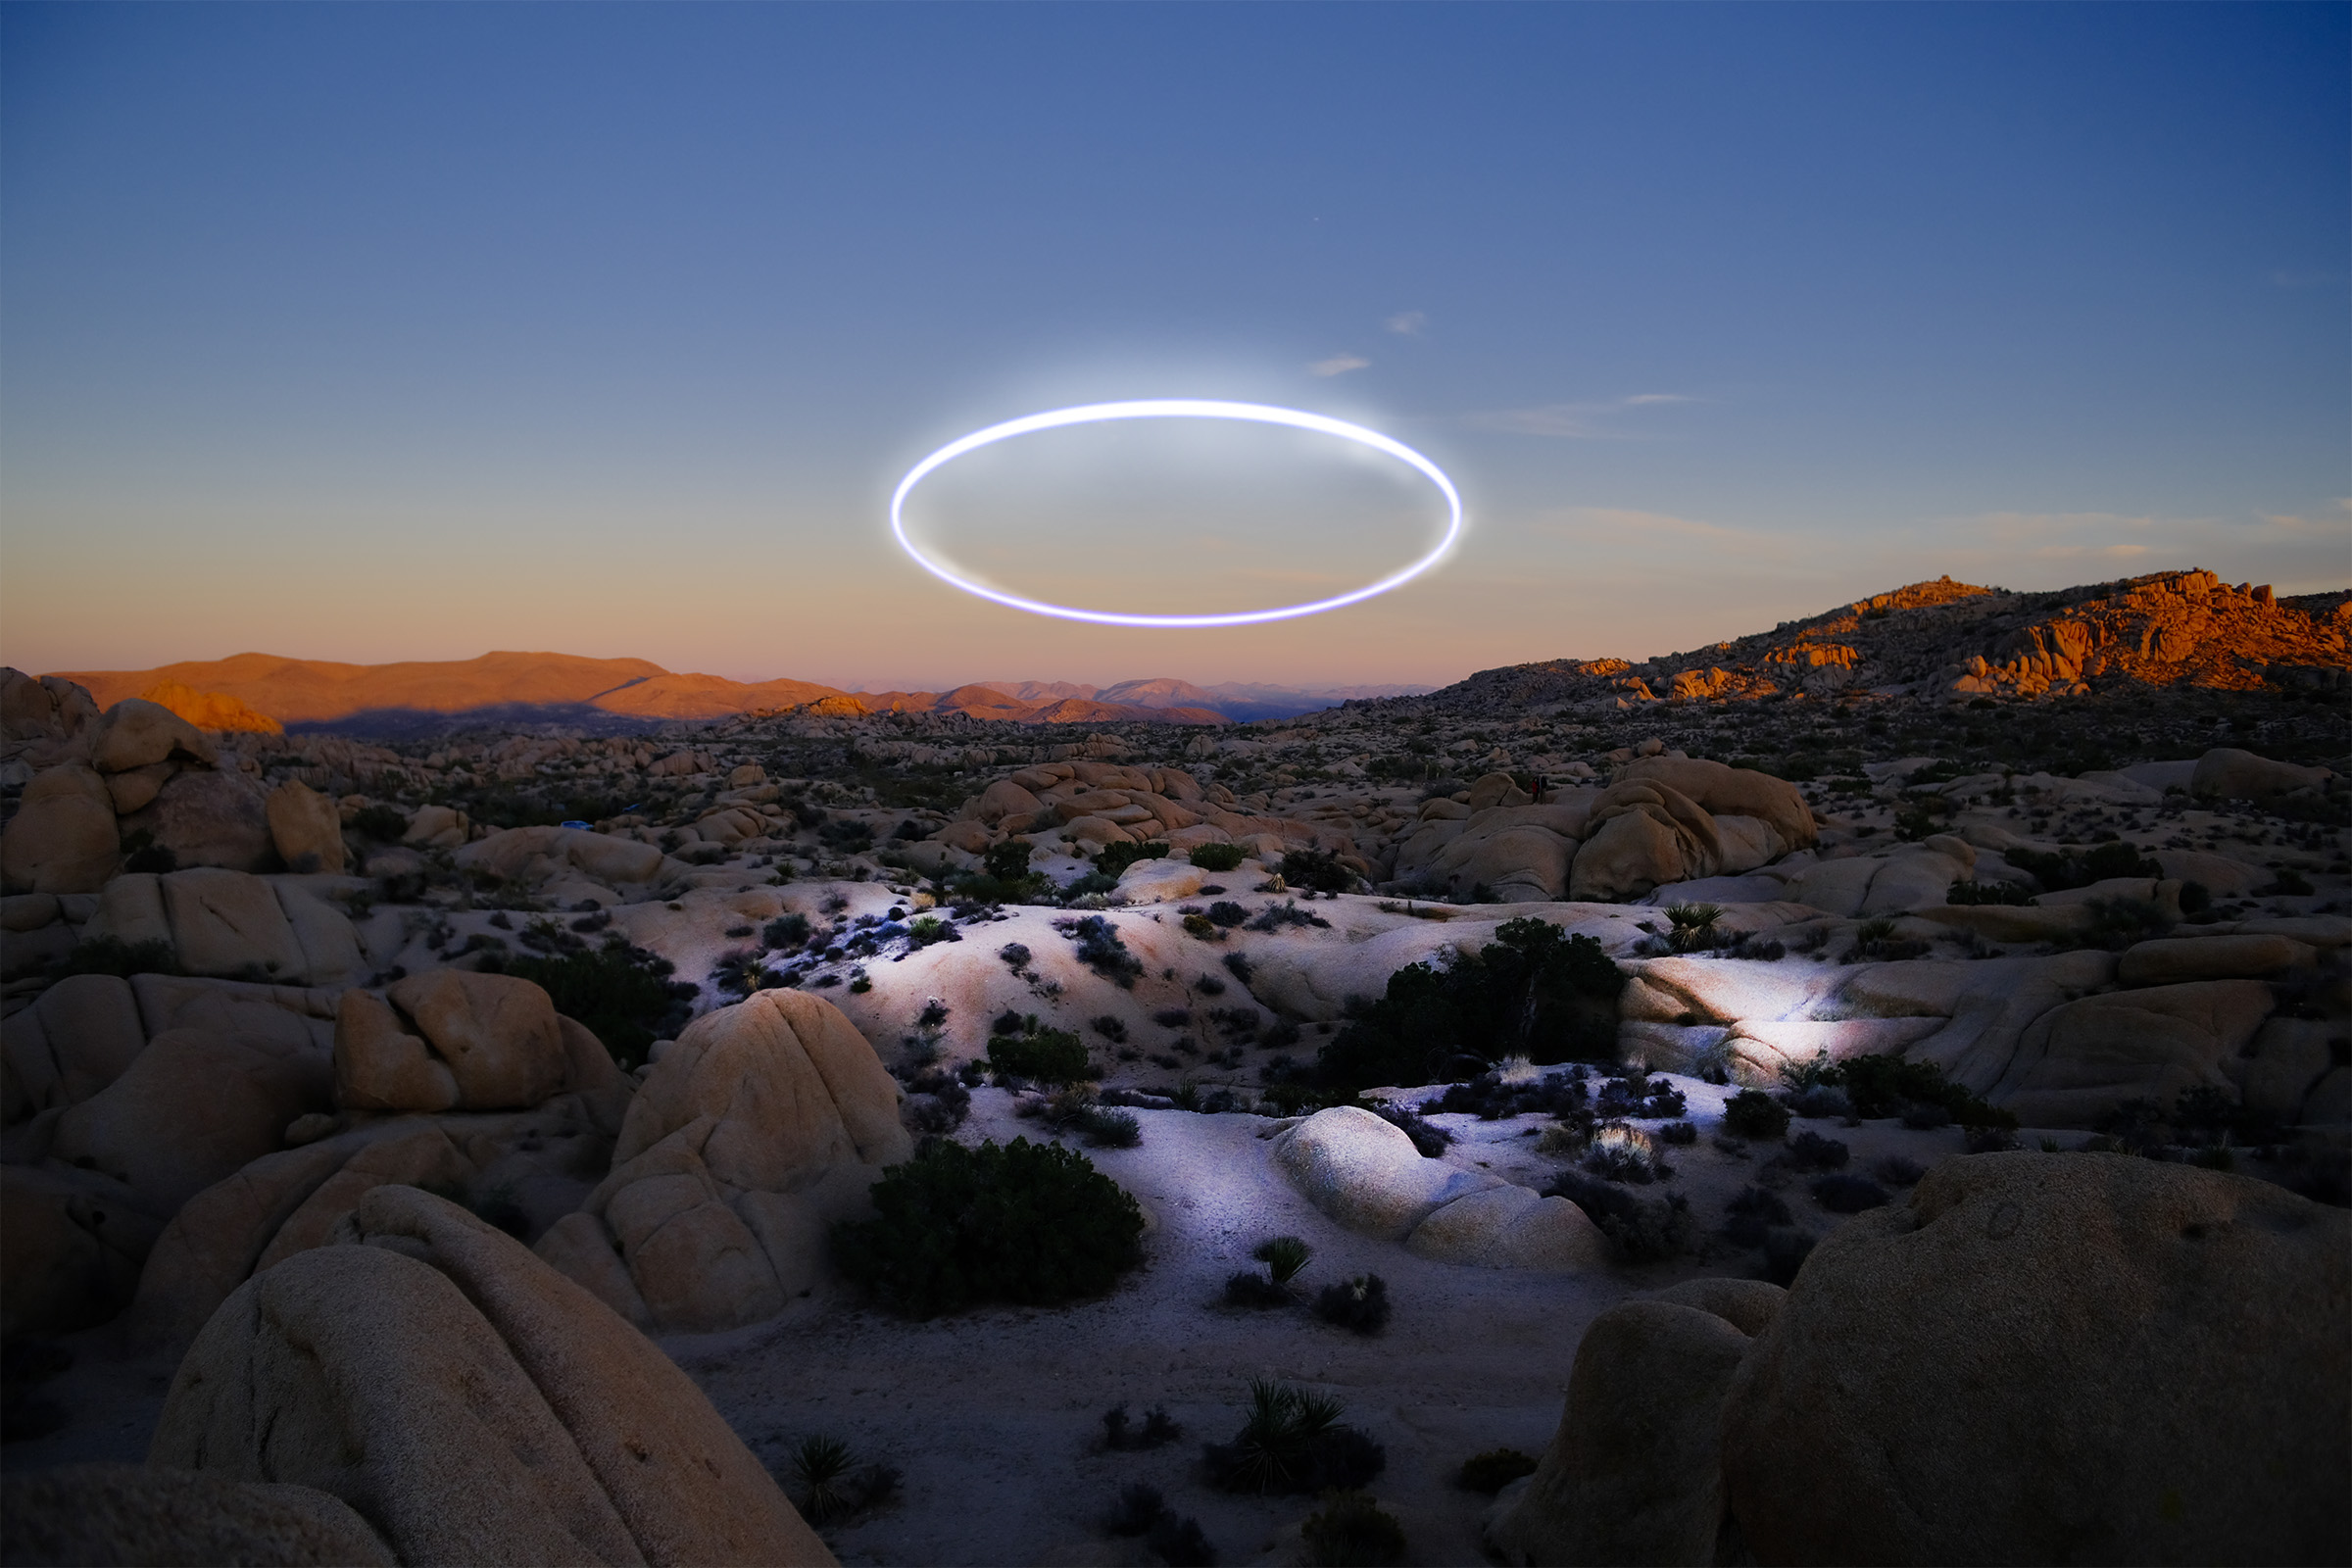 A luminous halo hovers above a desert landscape at dusk.